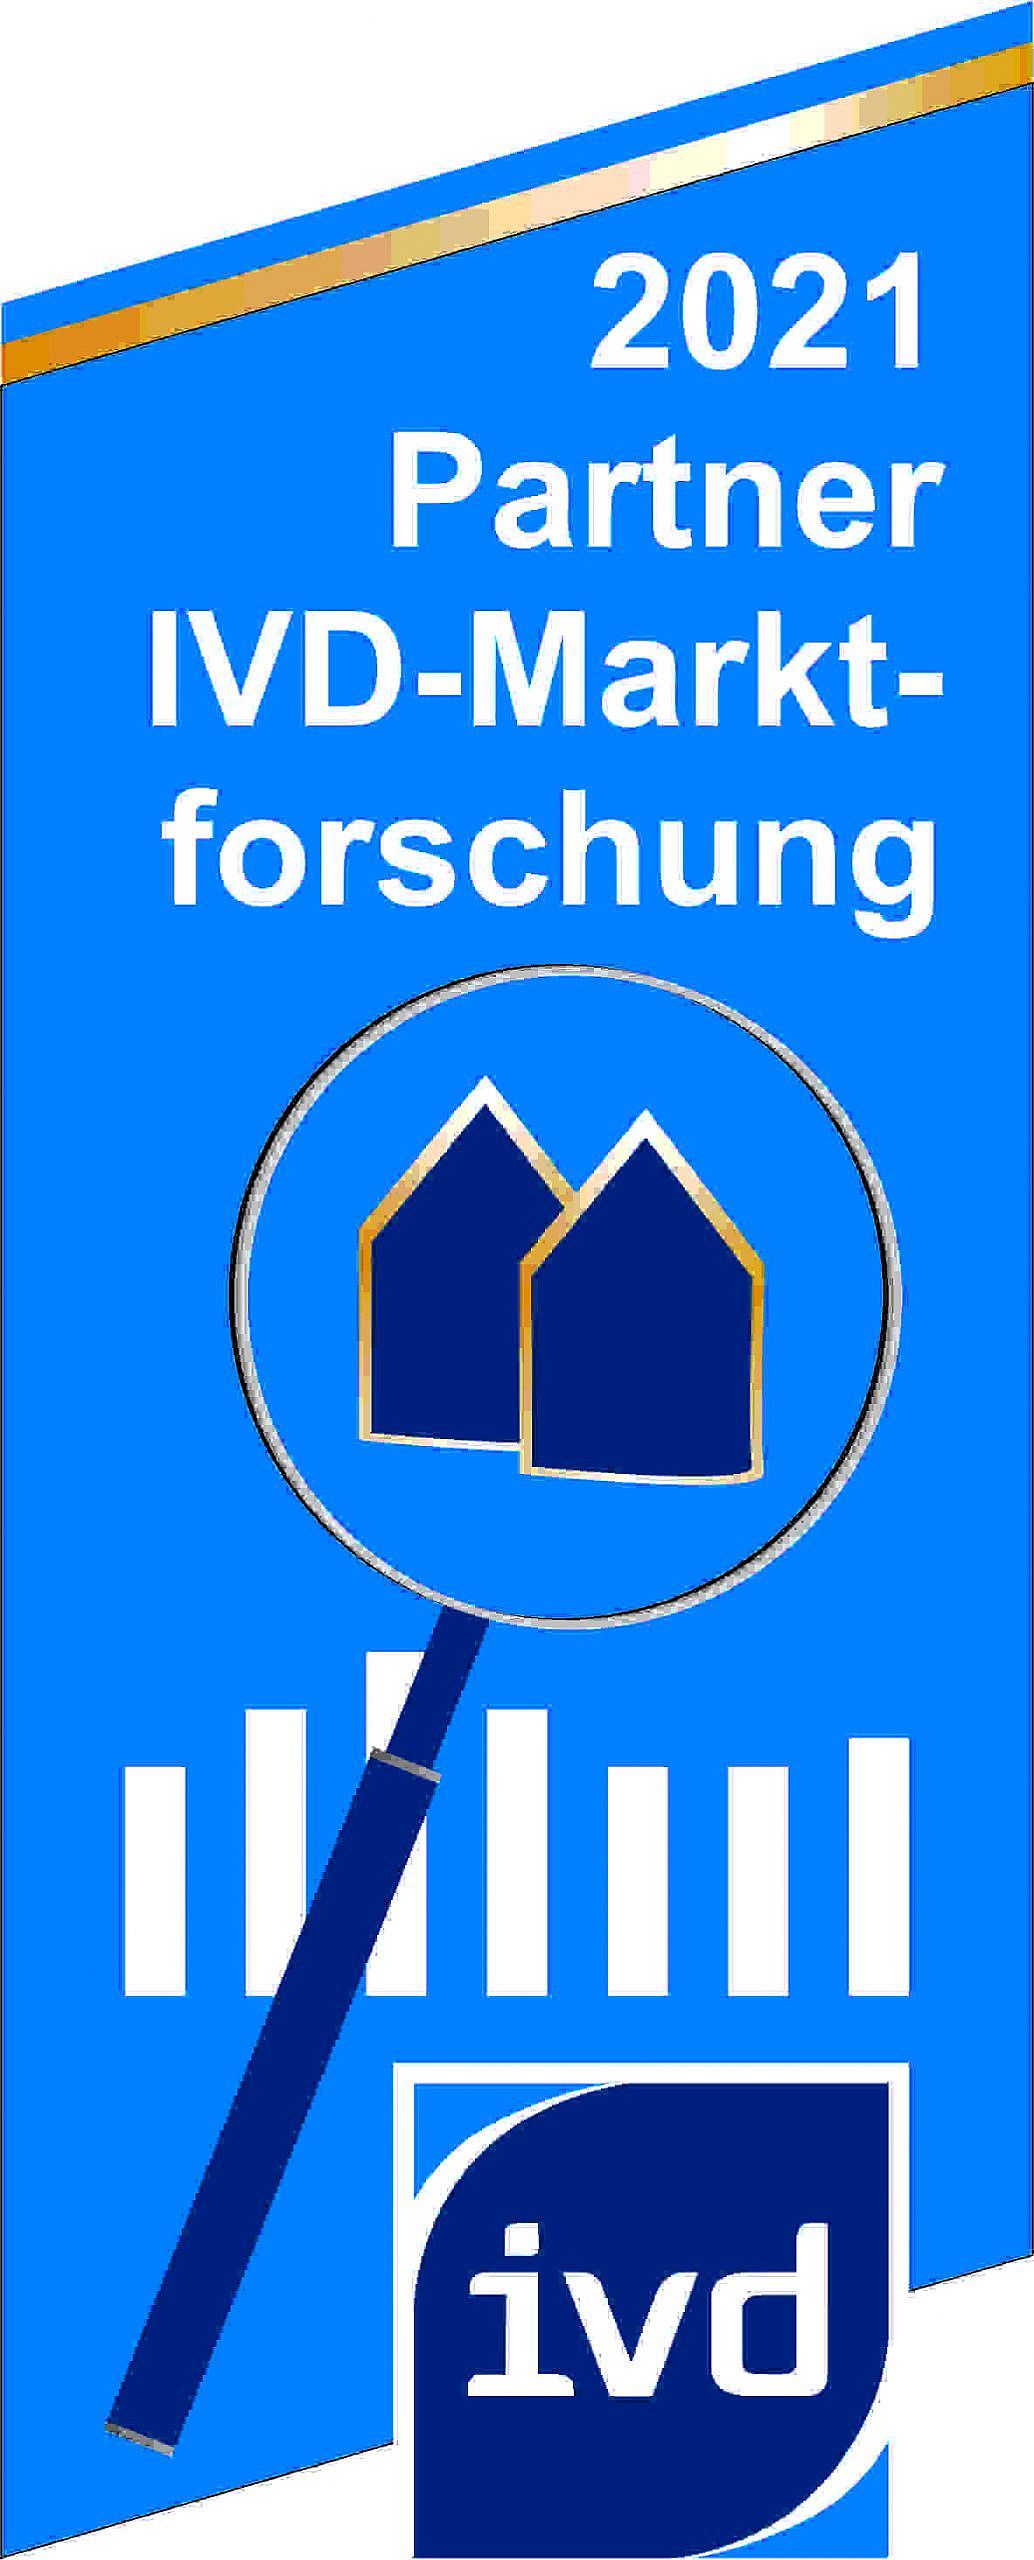 Dr. Körner Immobilien ist Partner IVD-Marktforschung 2021 in Nürnberg